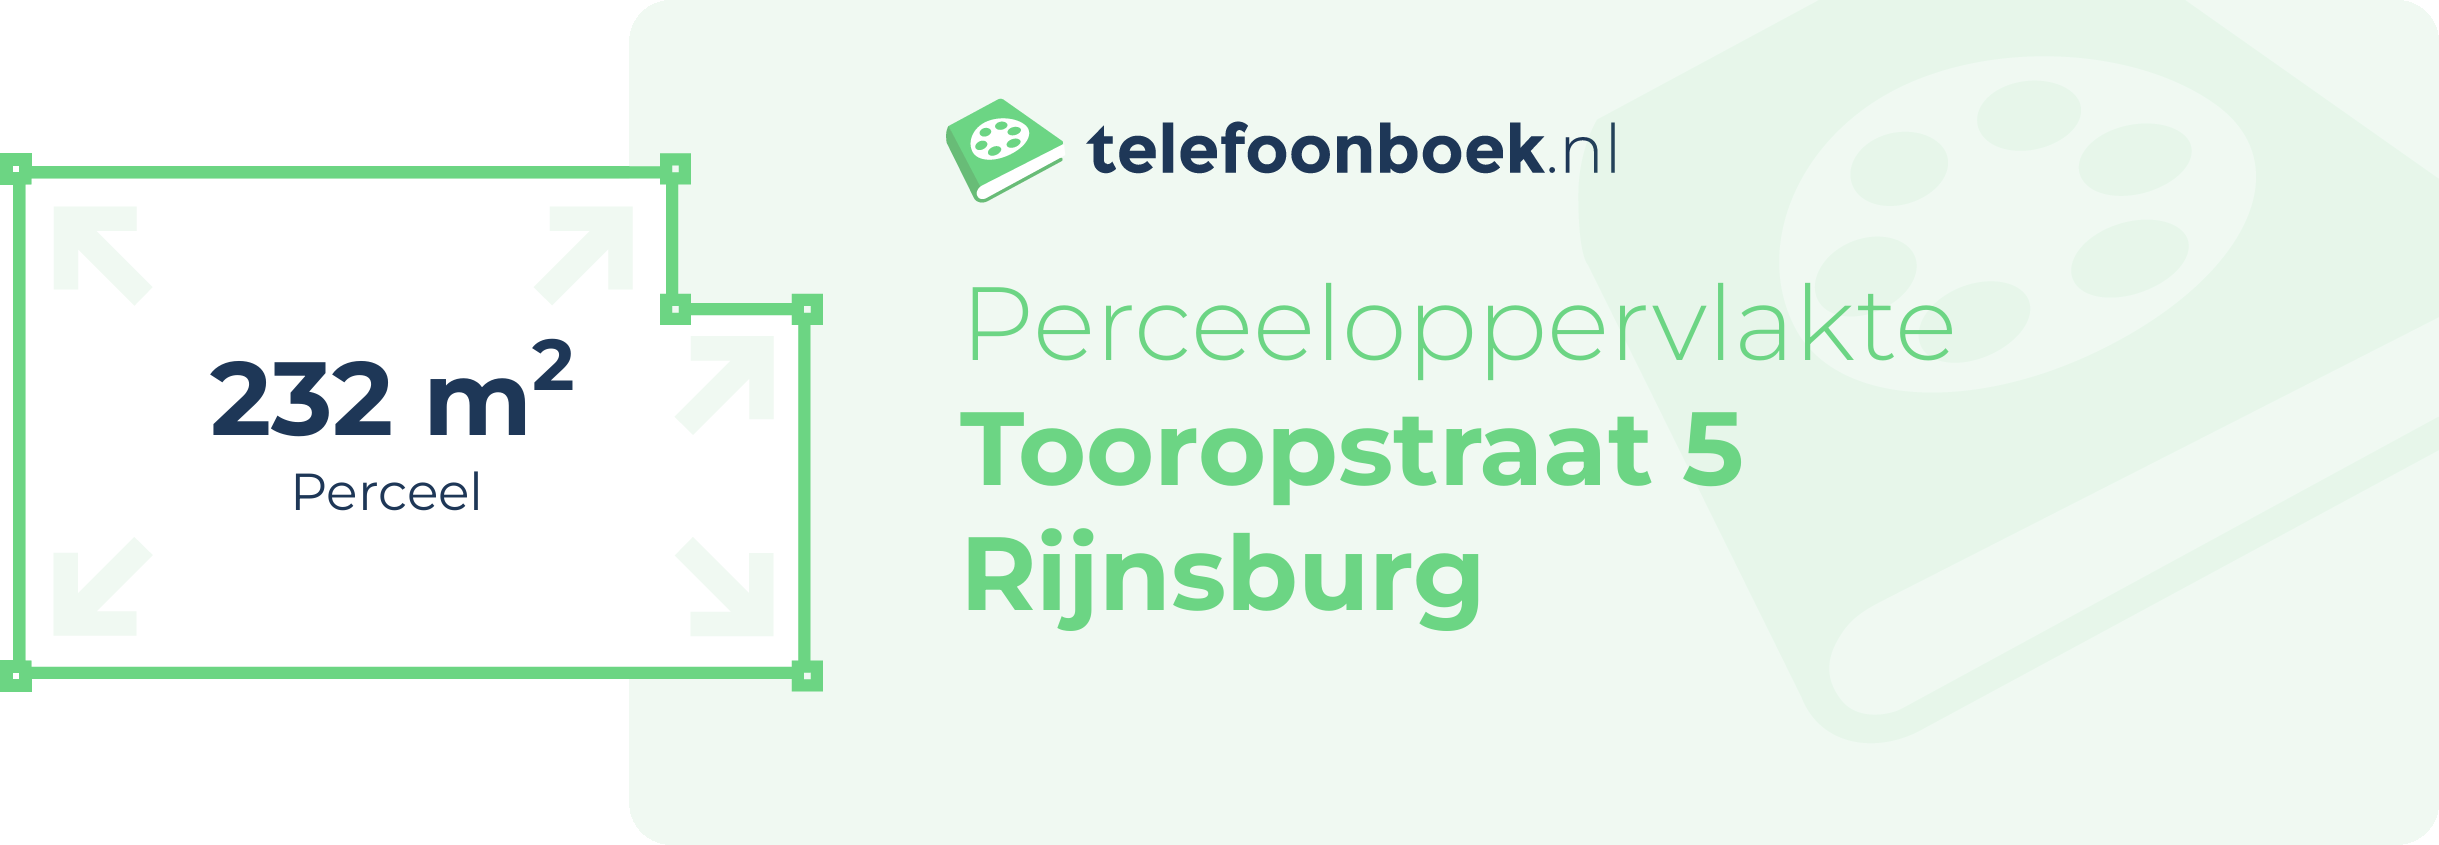 Perceeloppervlakte Tooropstraat 5 Rijnsburg